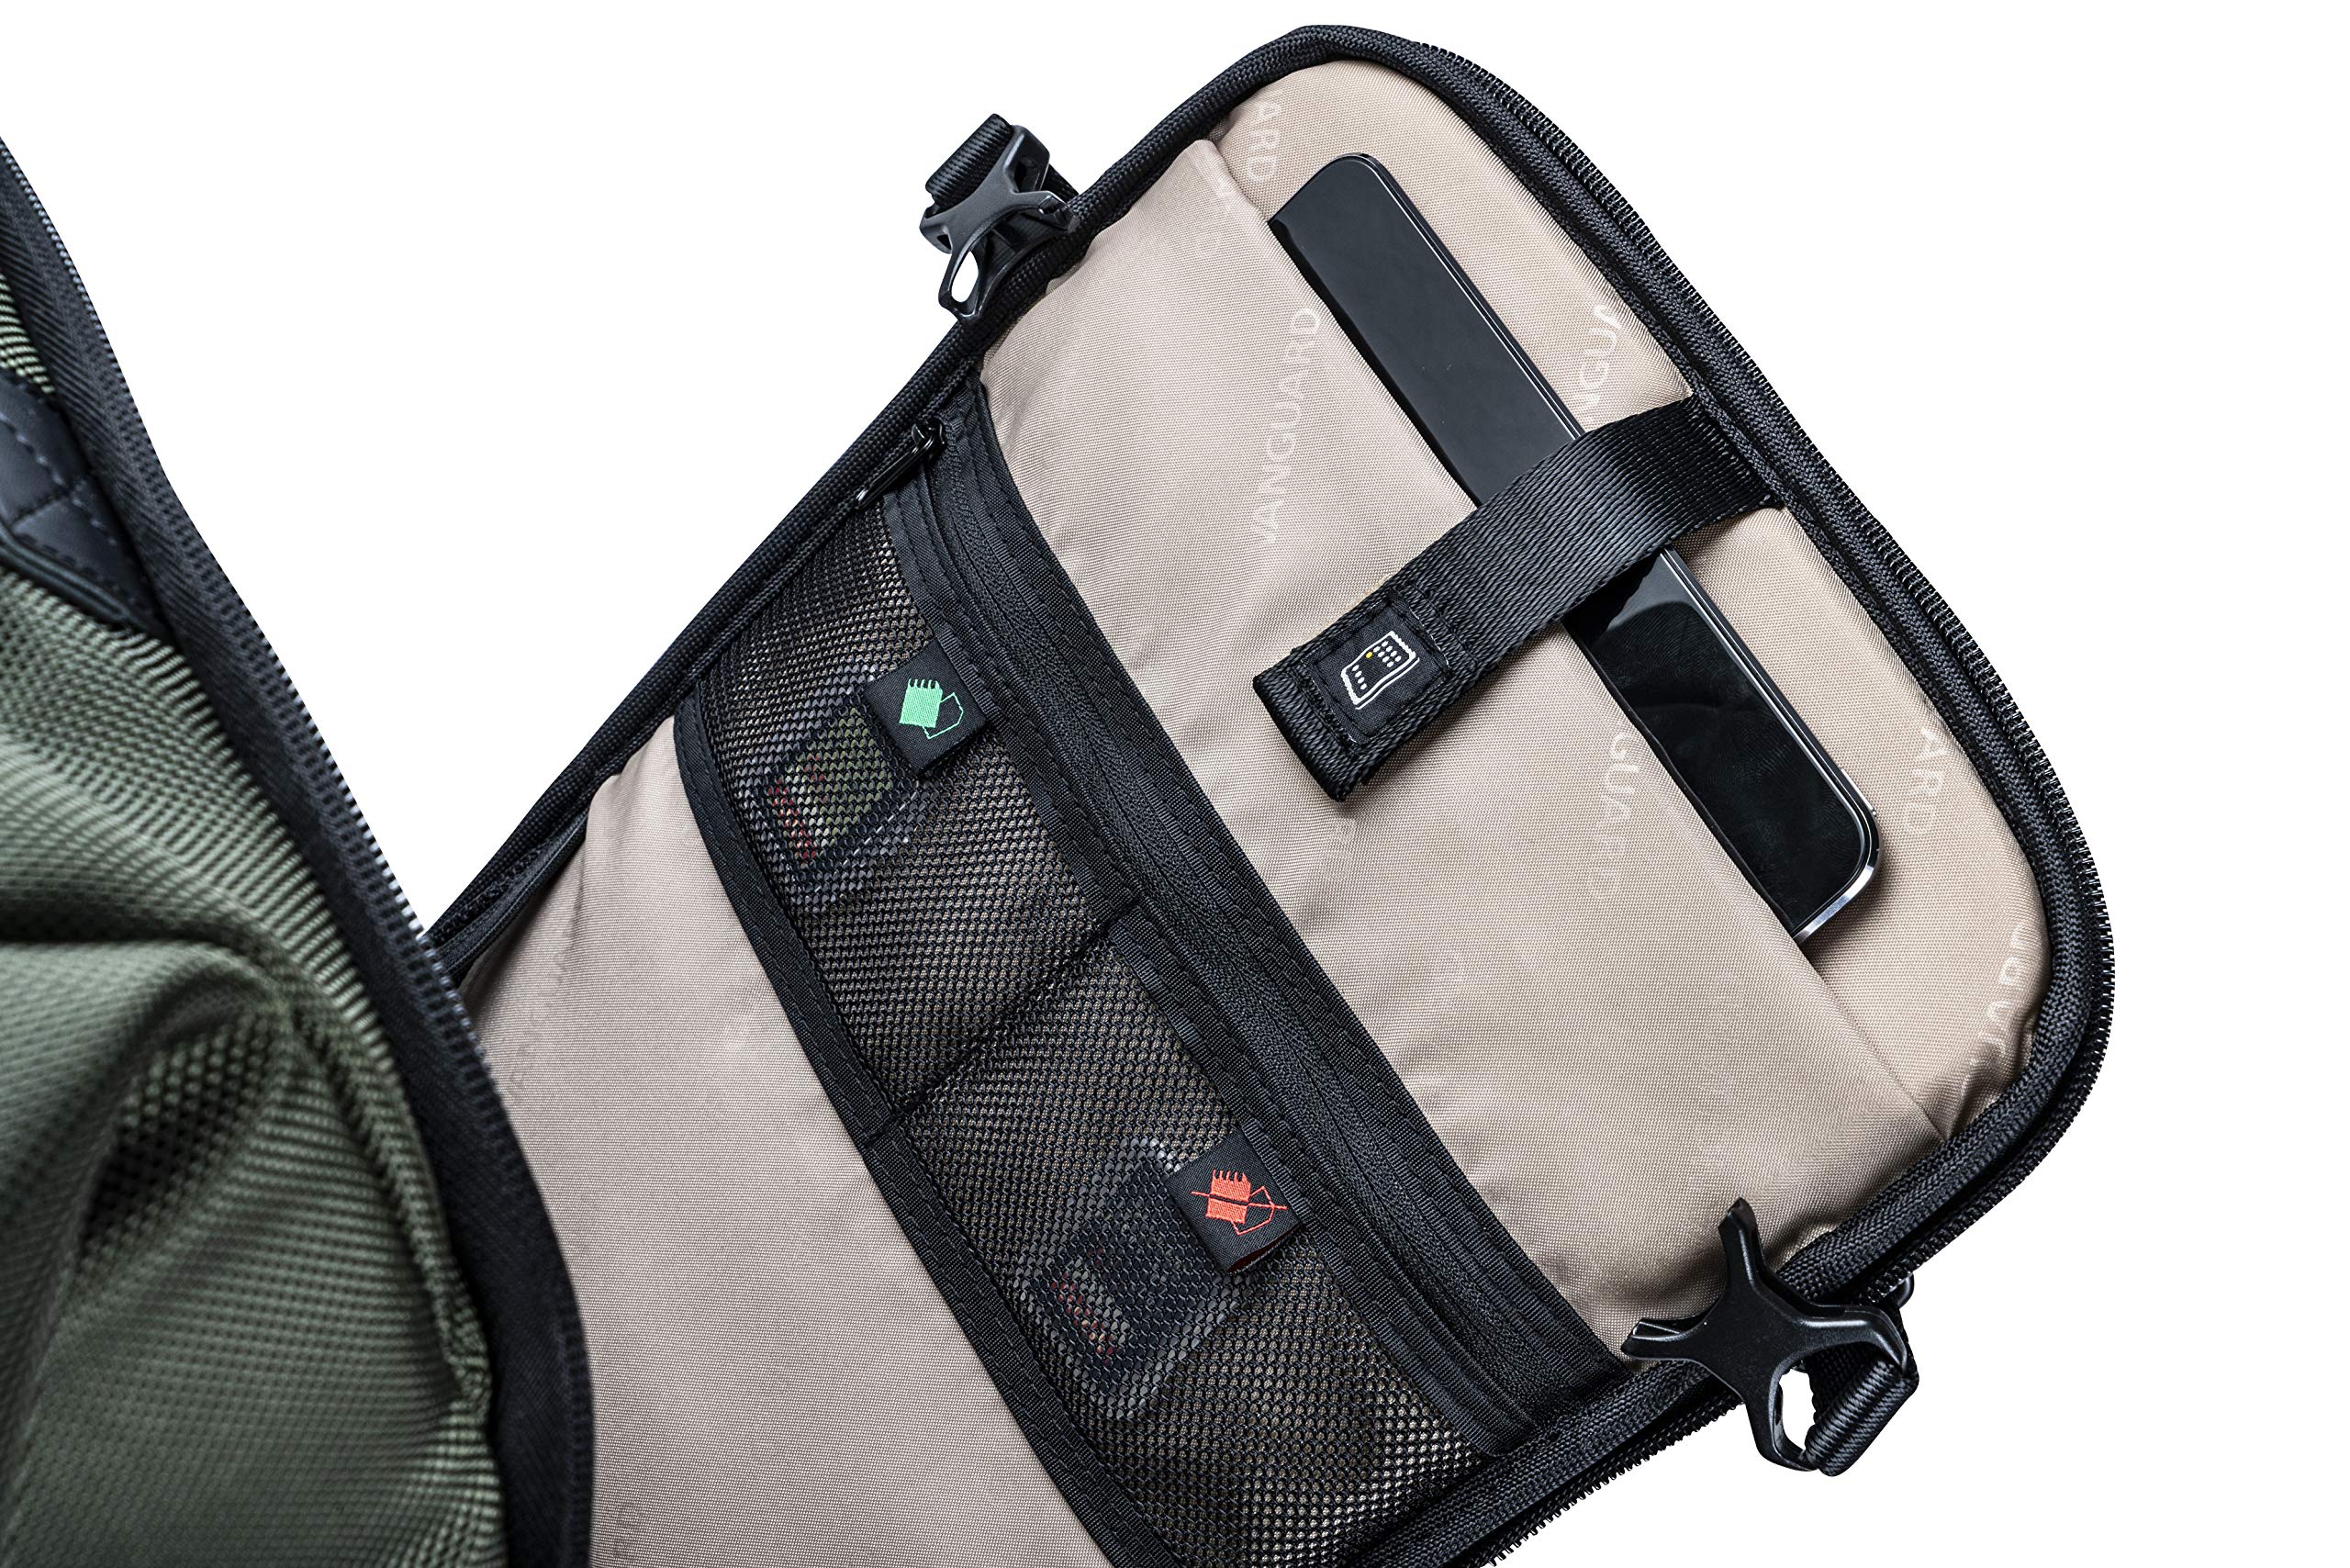 Vanguard VEO Select 43RB Rolltop Camera Backpack, Green